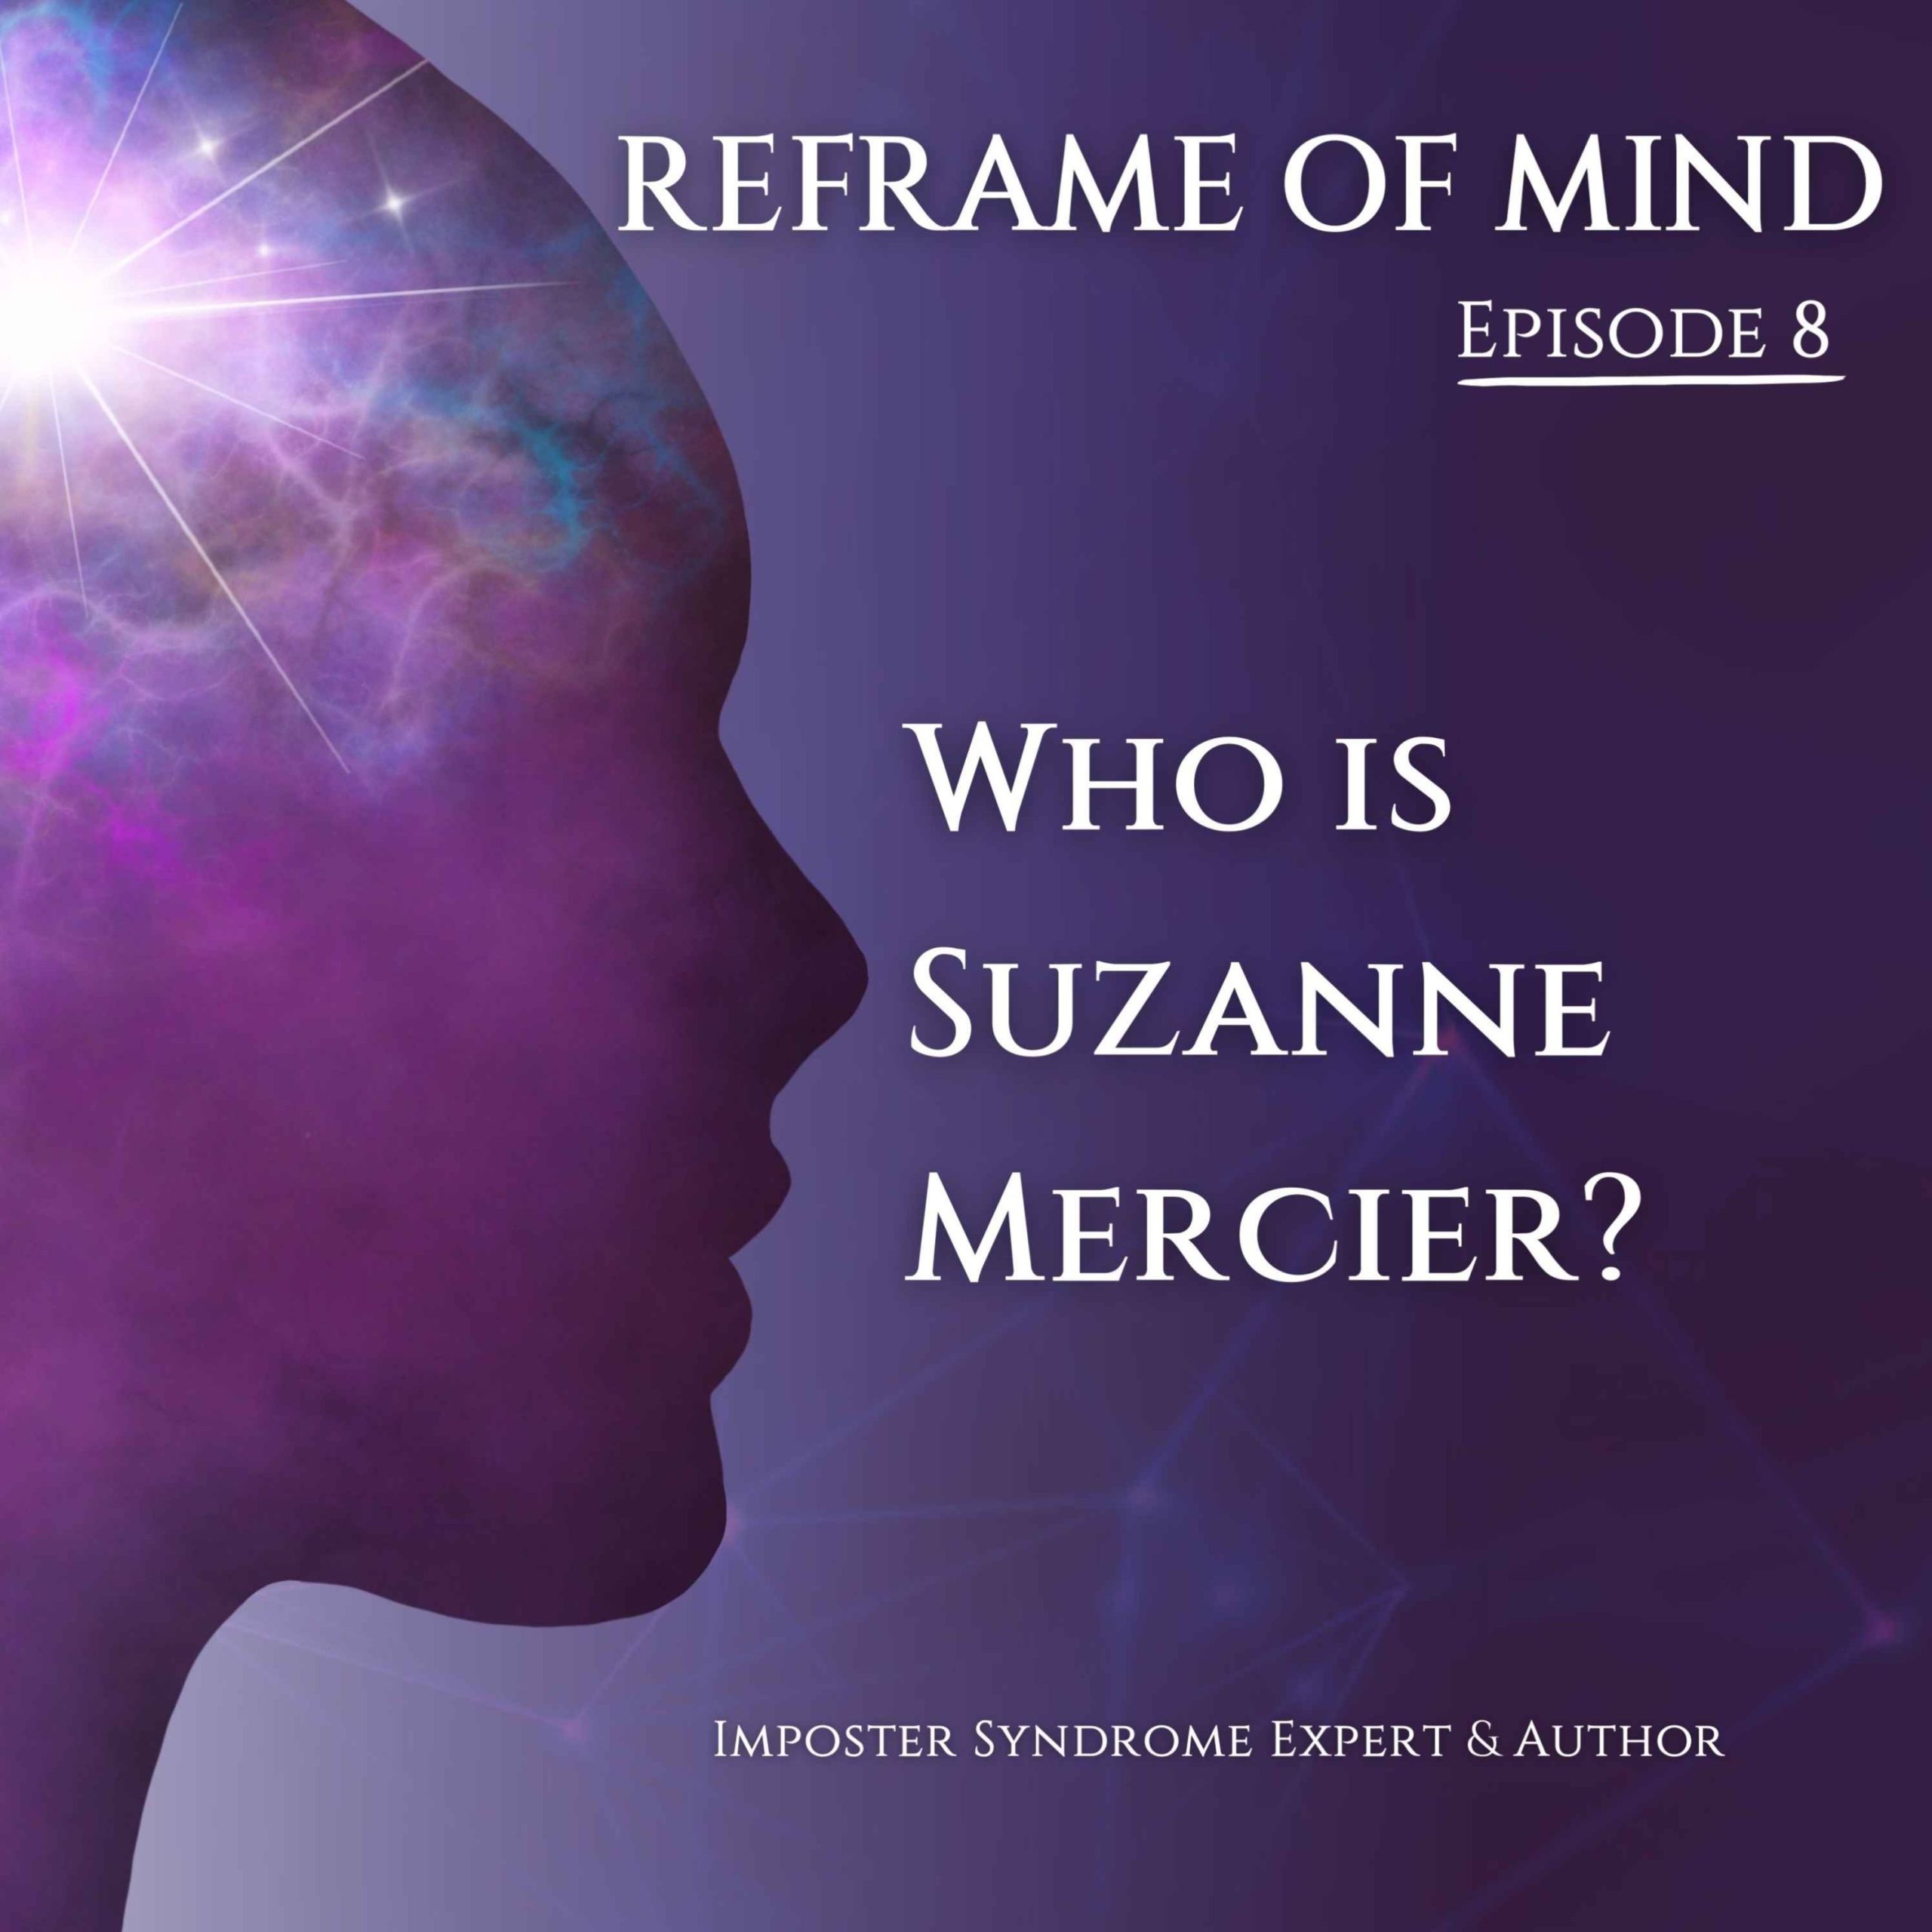 Who is Suzanne Mercier?